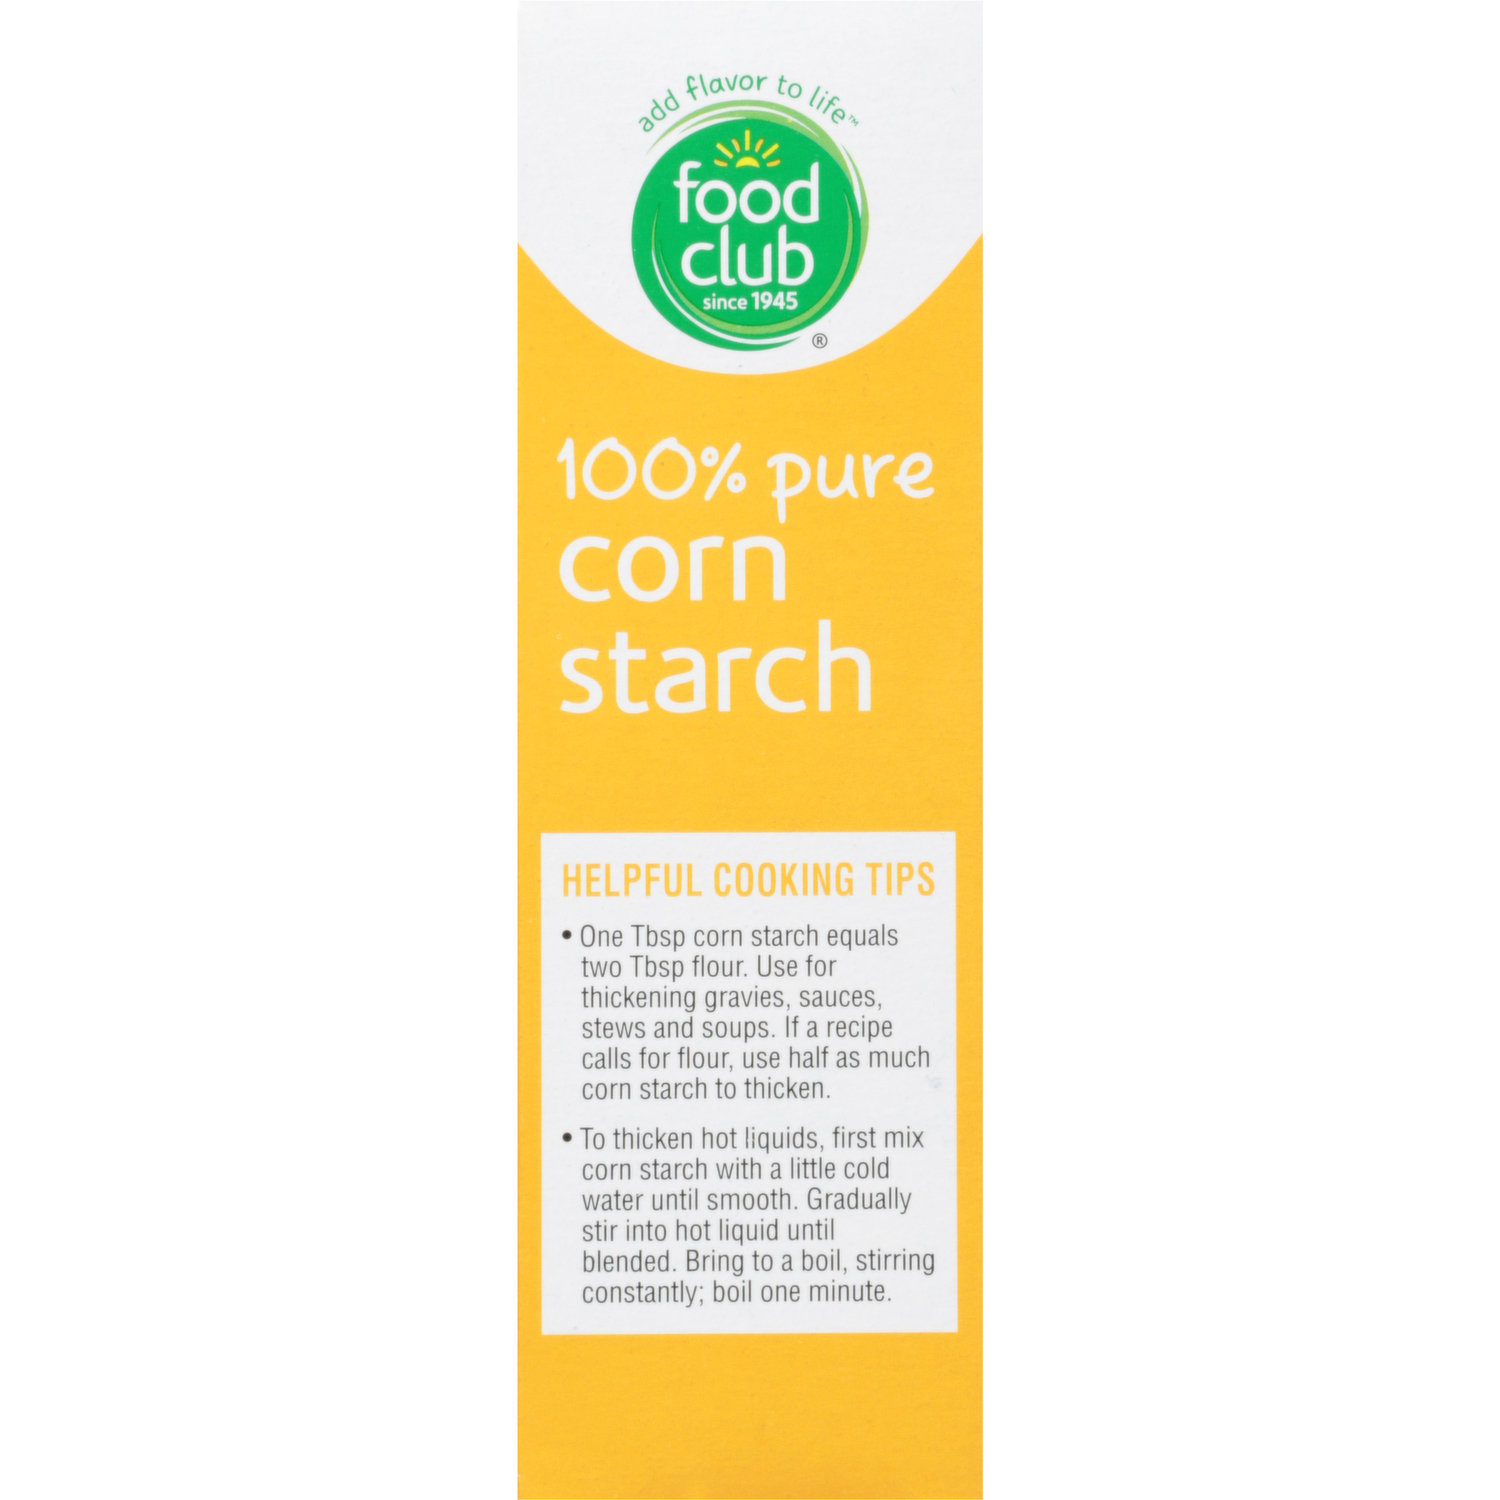 King Corn Starch Water Bottle Chunks!!! 🤤🤤🤤 #cornstarch #cornstarchasmr  #cornstarchchunks #cornstarchsqueaks #starch #kingcornstarchedits…